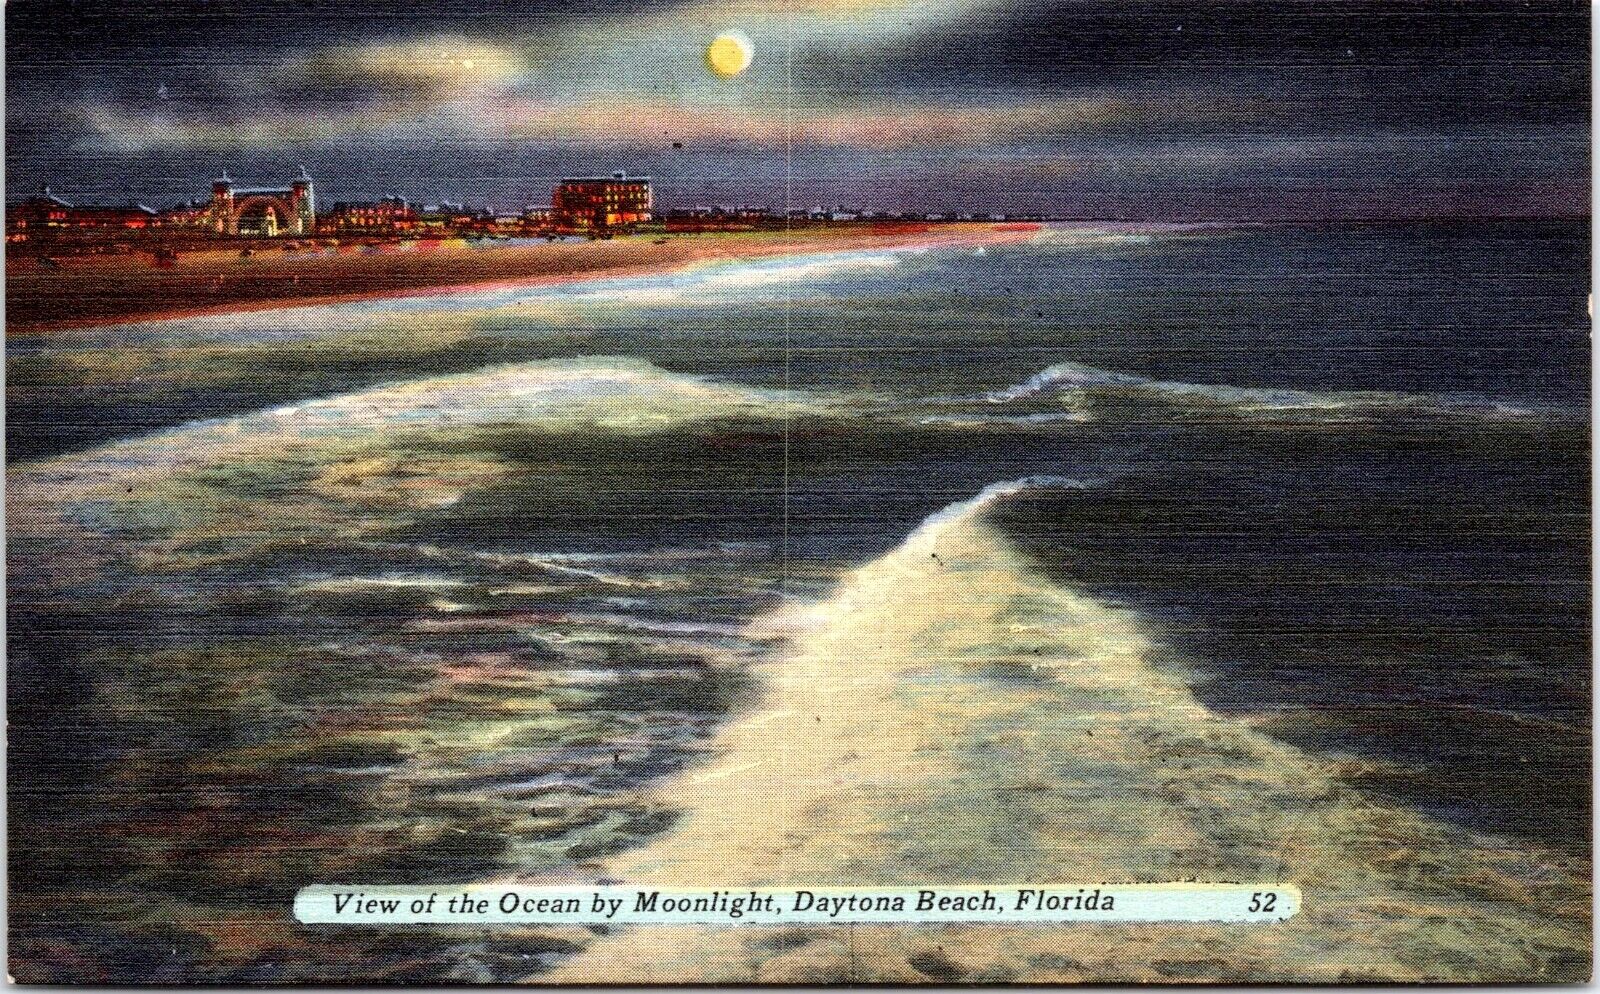 View of Ocean, Moonlight, Daytona Beach Florida - c1940s Linen Postcard- Tichnor